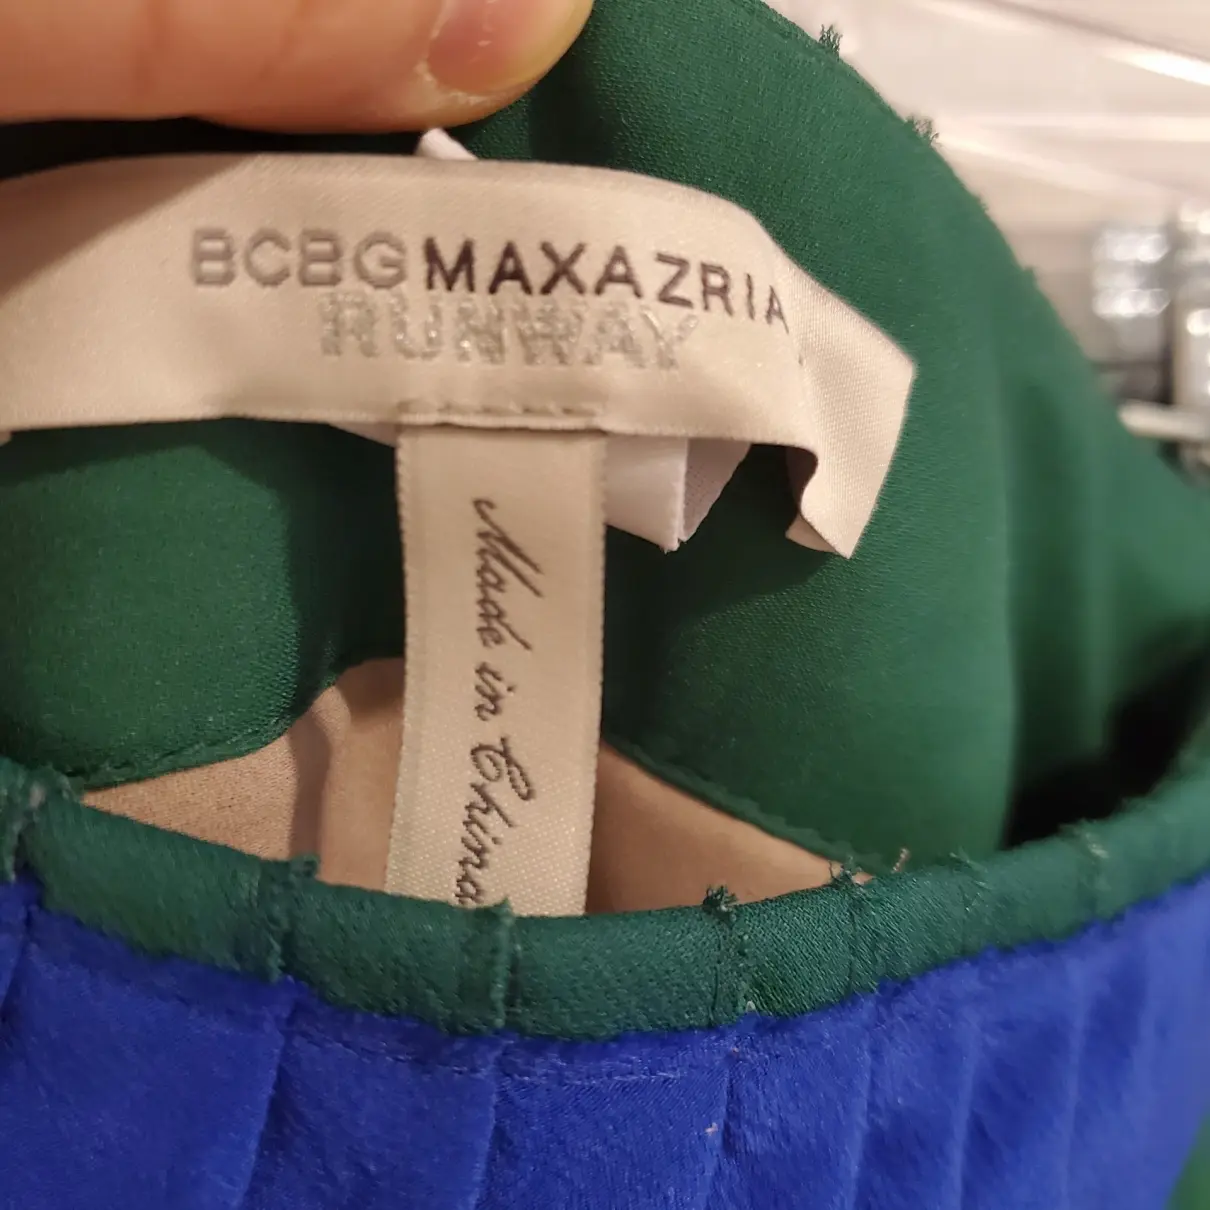 Buy Bcbg Max Azria Silk mid-length skirt online